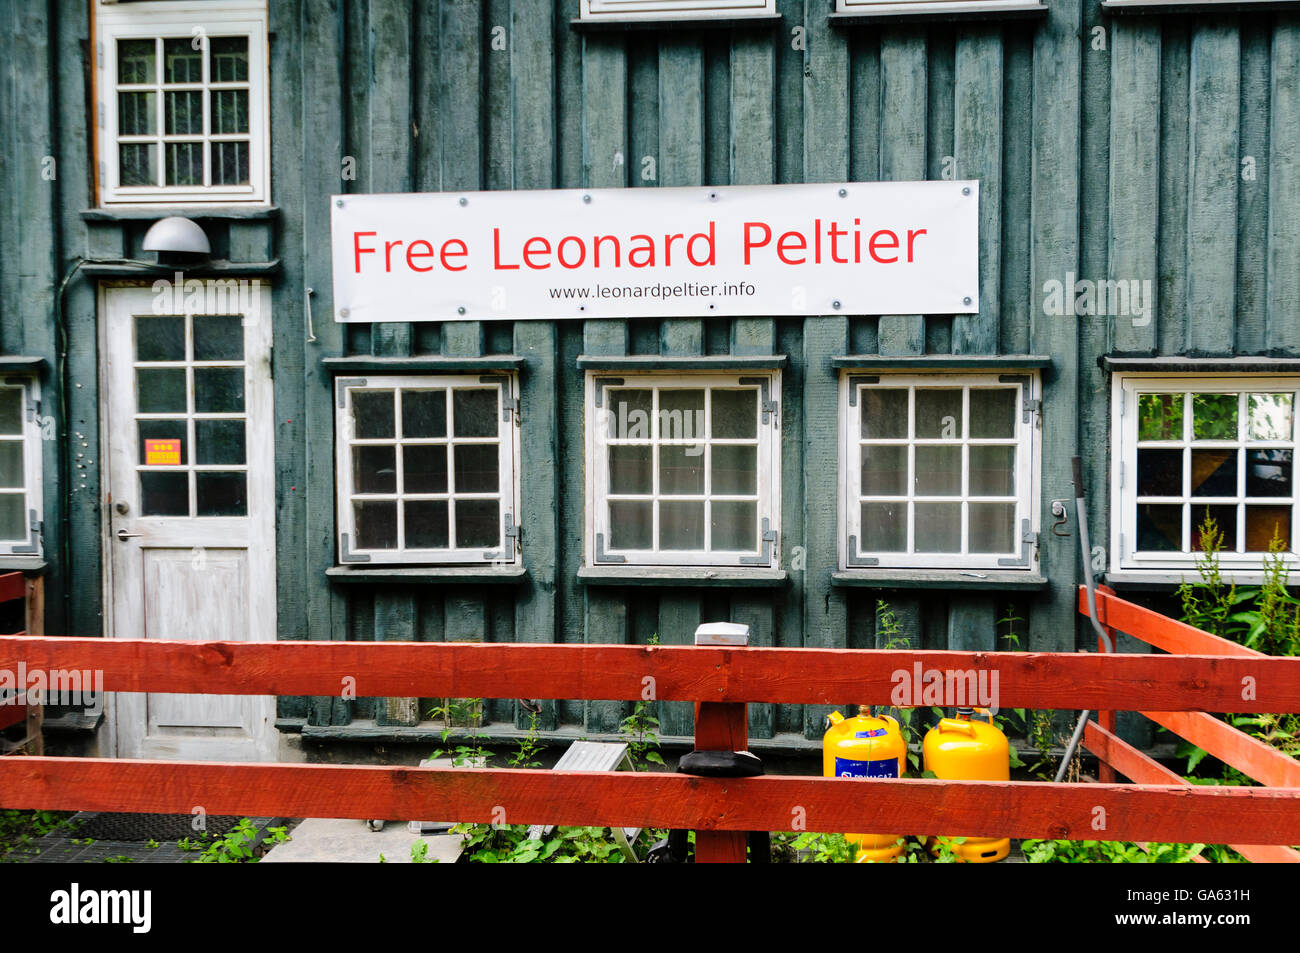 'Free Leonard Peltier' banner on a traditional green wooden house in Denmark Stock Photo